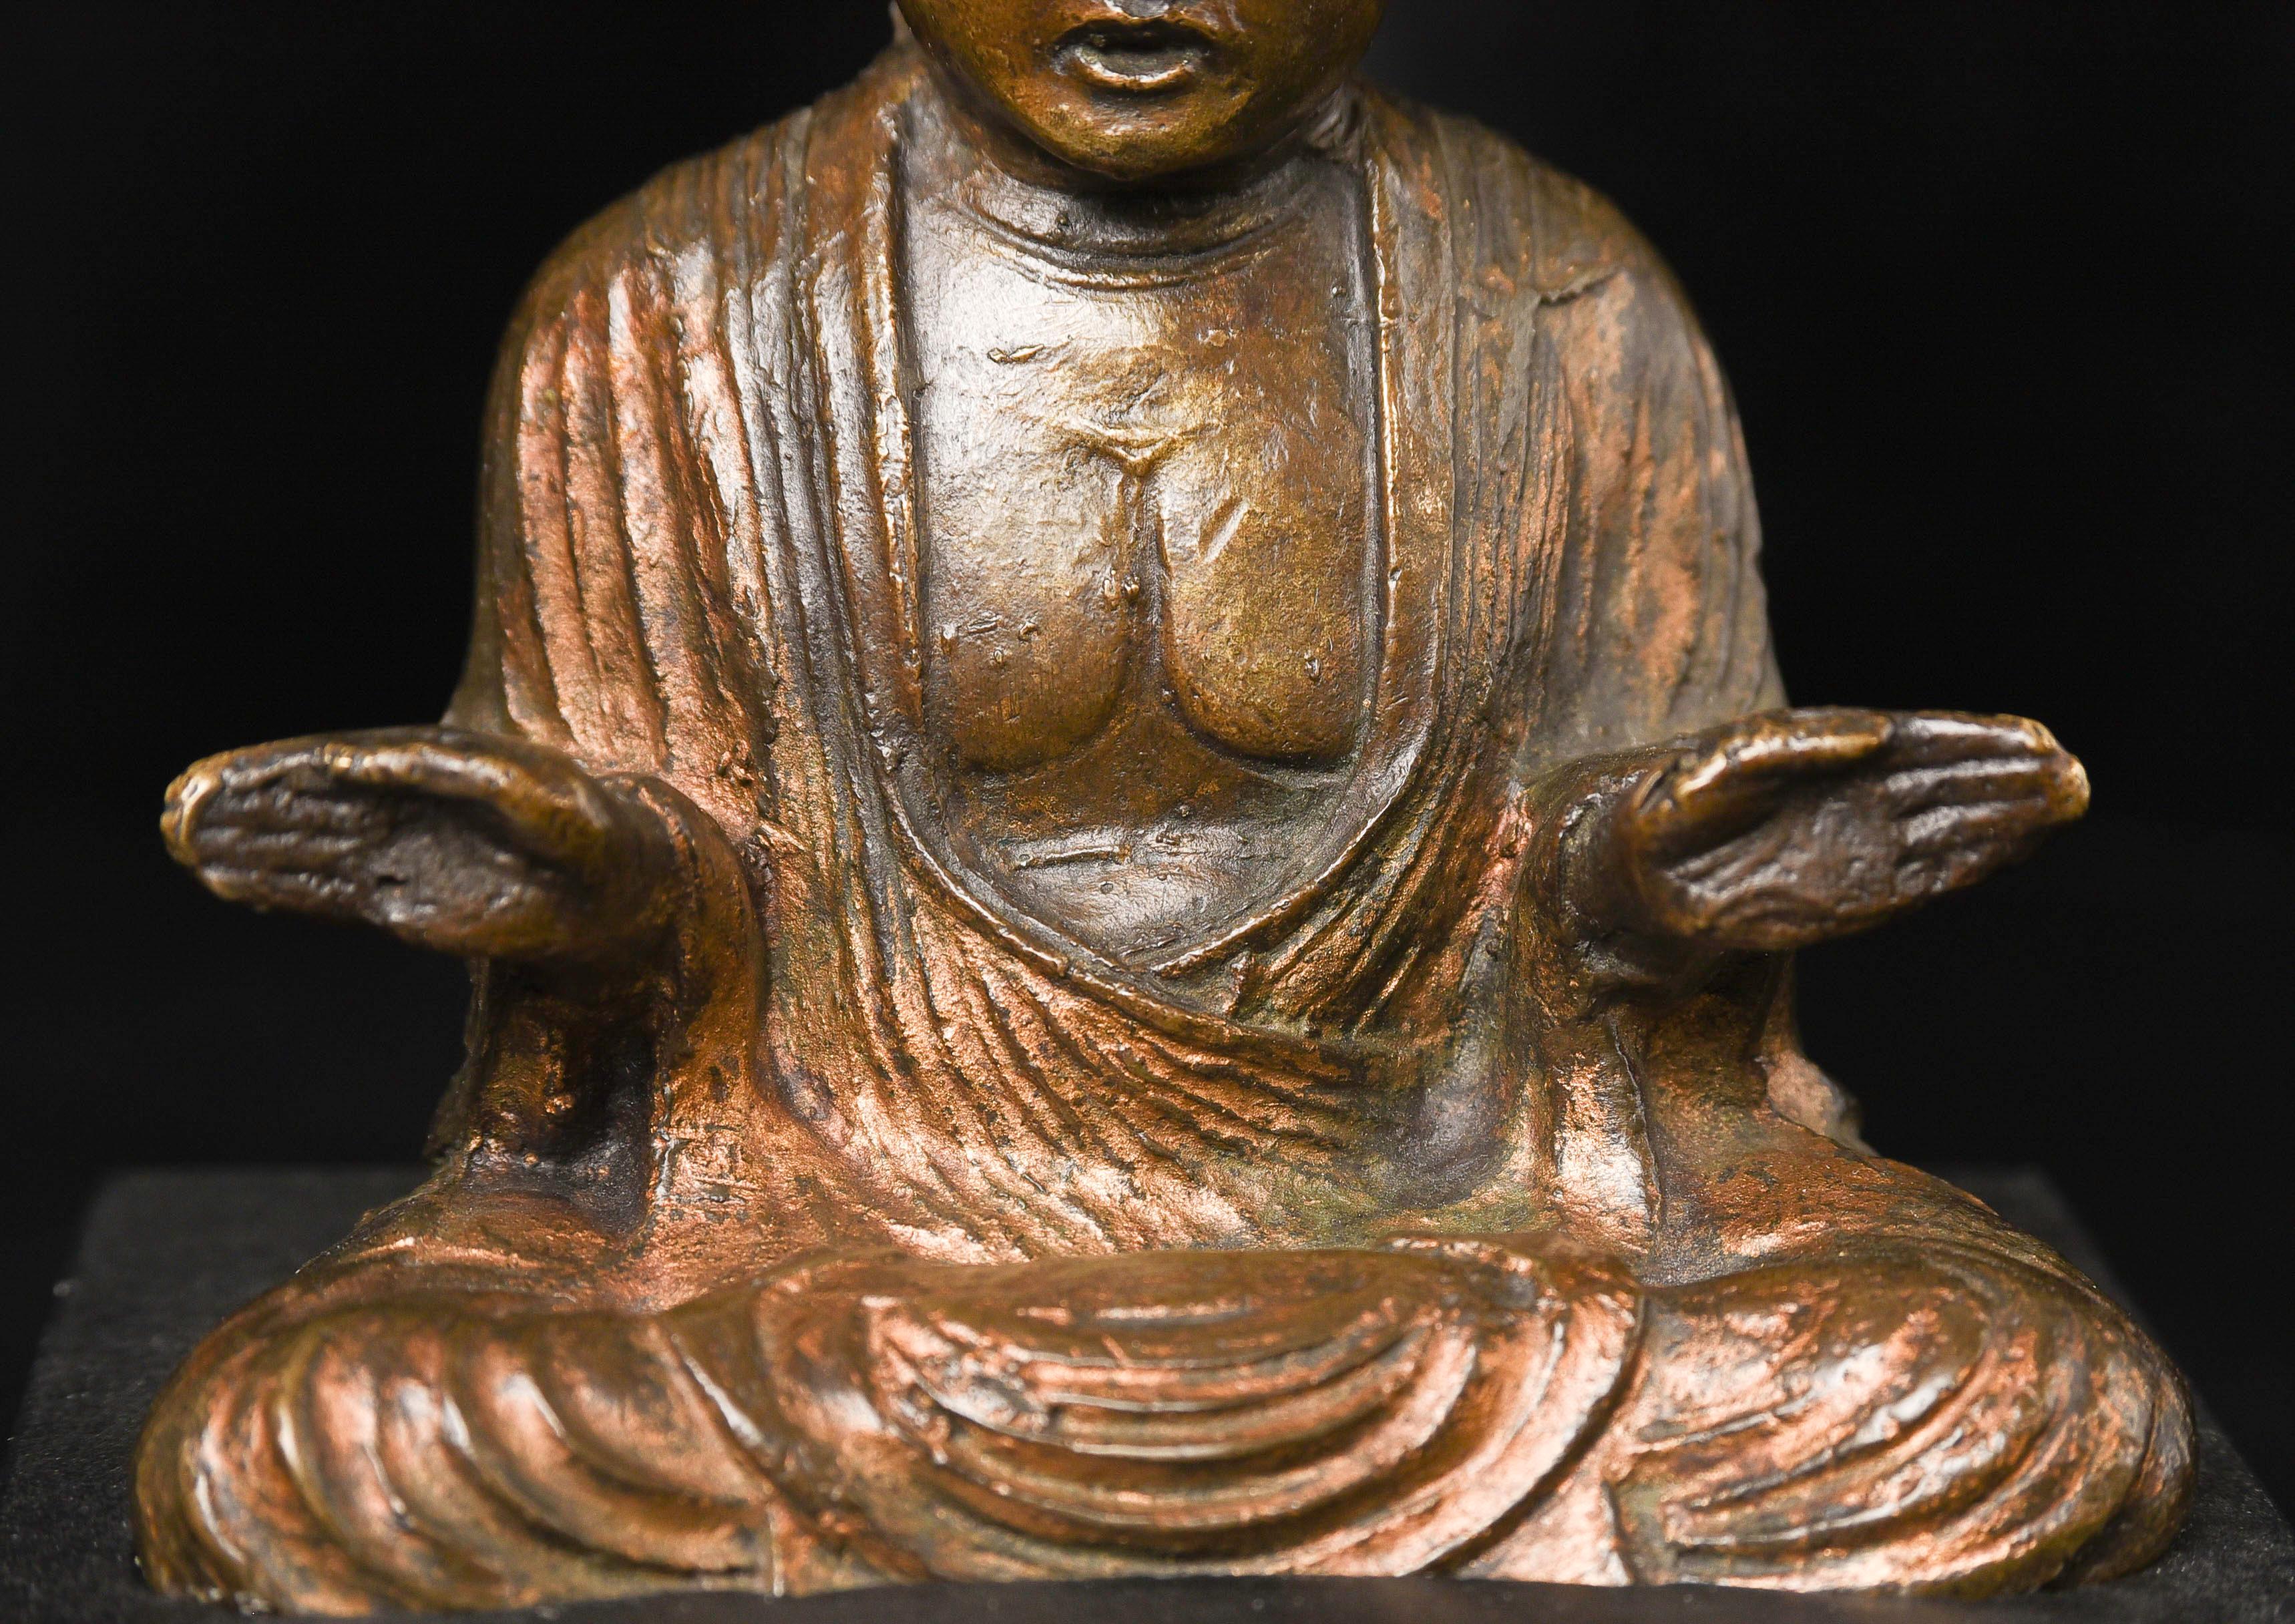 Antique Korean or Japanese Buddha - 9719 4